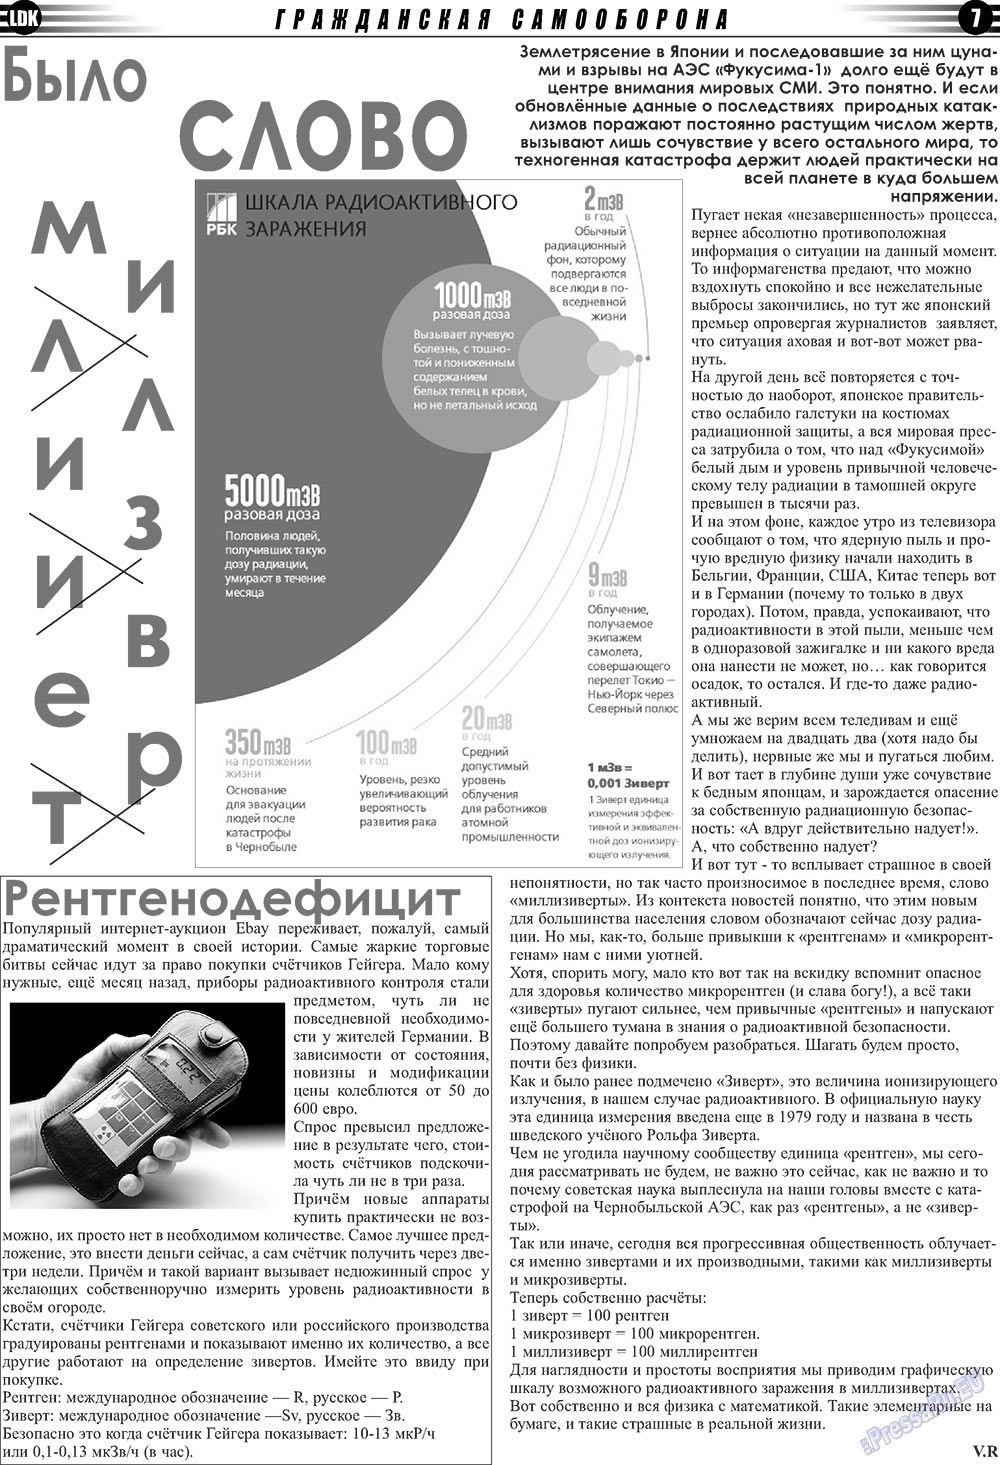 LDK по-русски, газета. 2011 №2 стр.7